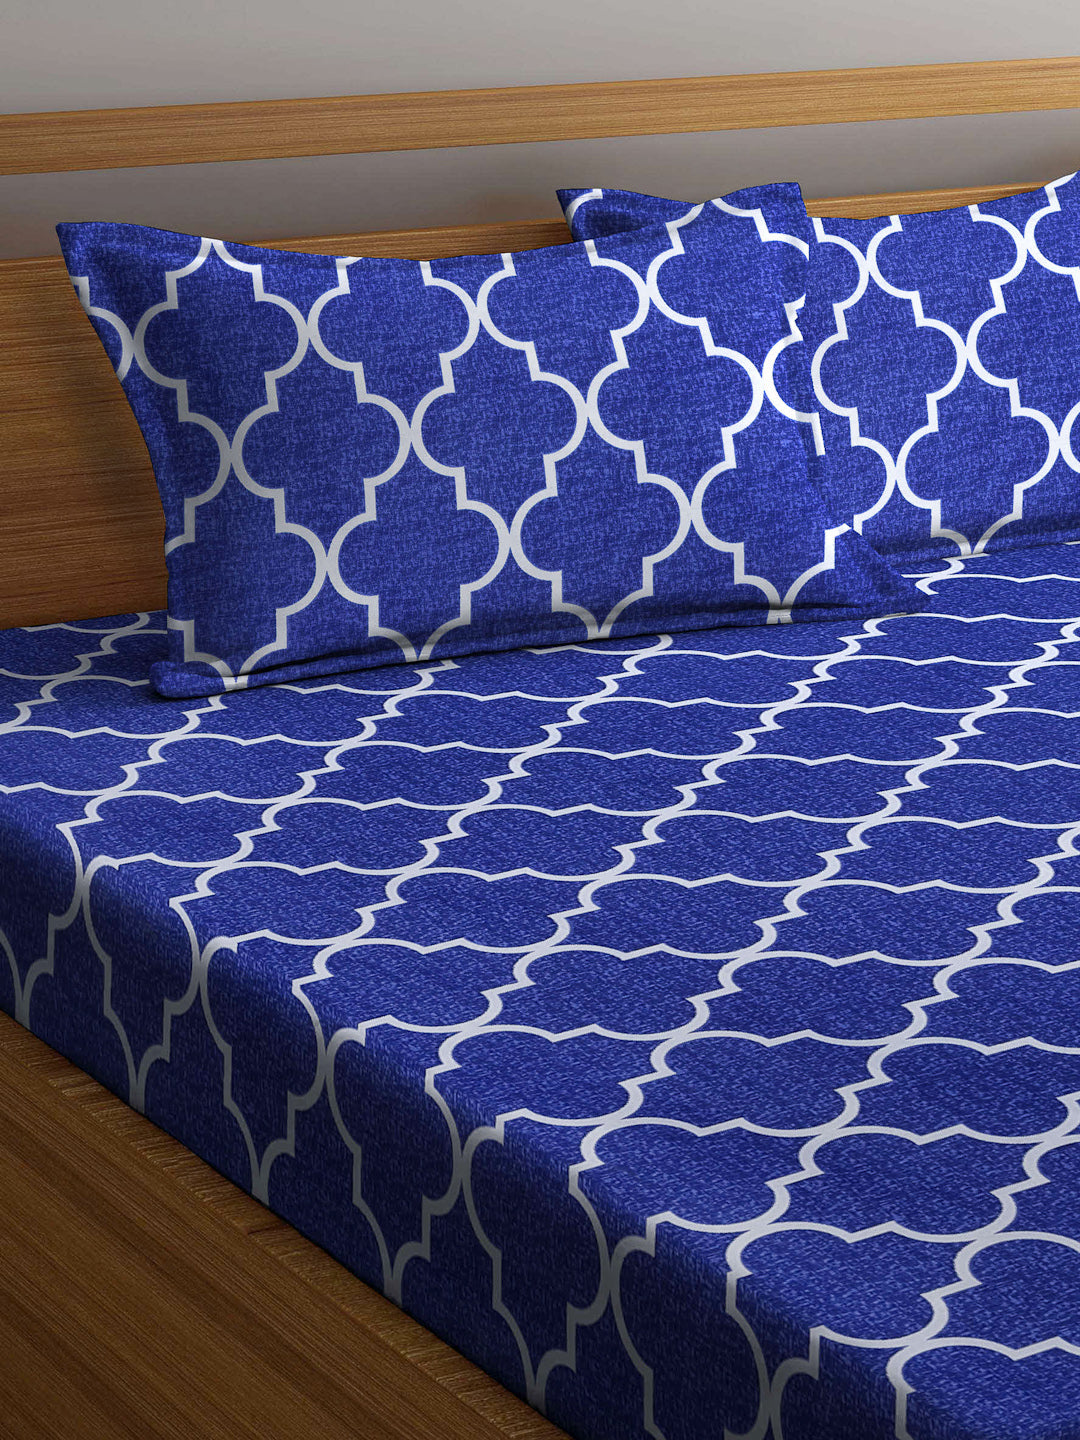 Arrabi Blue Indian TC Cotton Blend Double Size Bedsheet with 2 Pillow Covers